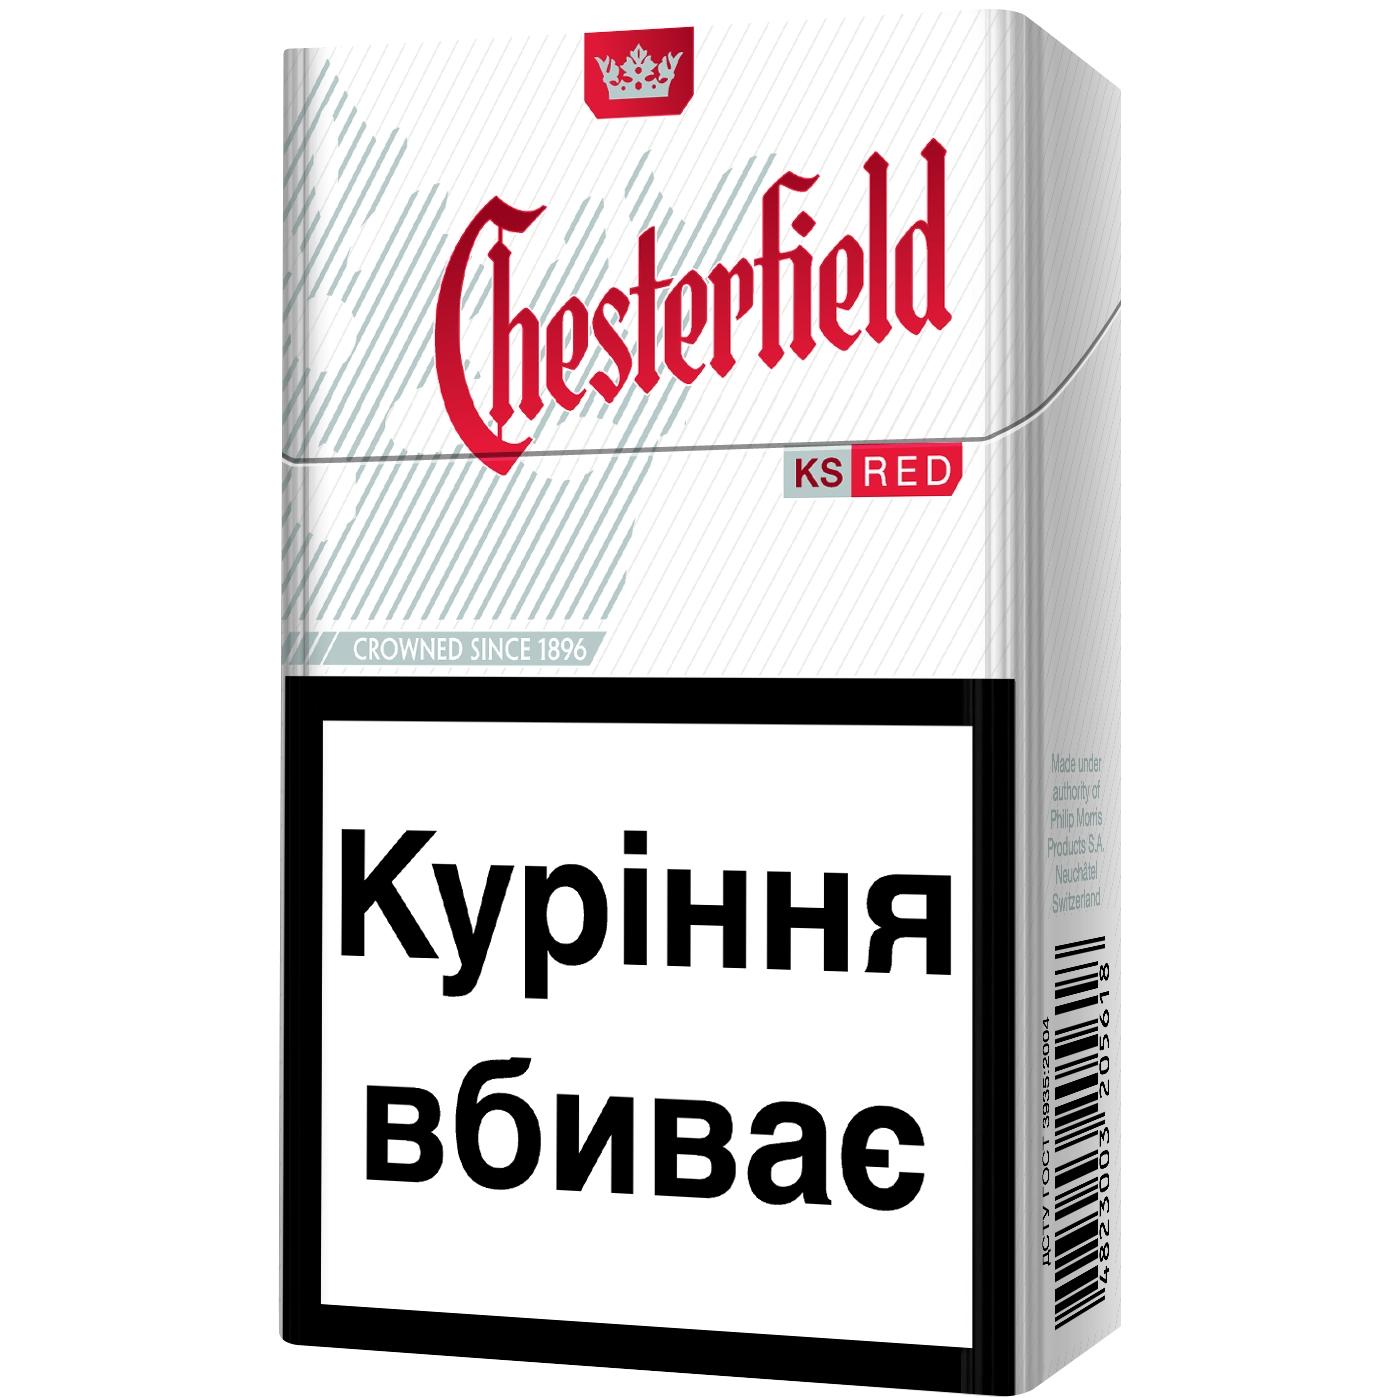 Честерфилд браун сигареты. Честер красный сигареты. Честерфилд сигареты красные. Сигареты Честерфилд ред. Chesterfield сигареты микс.